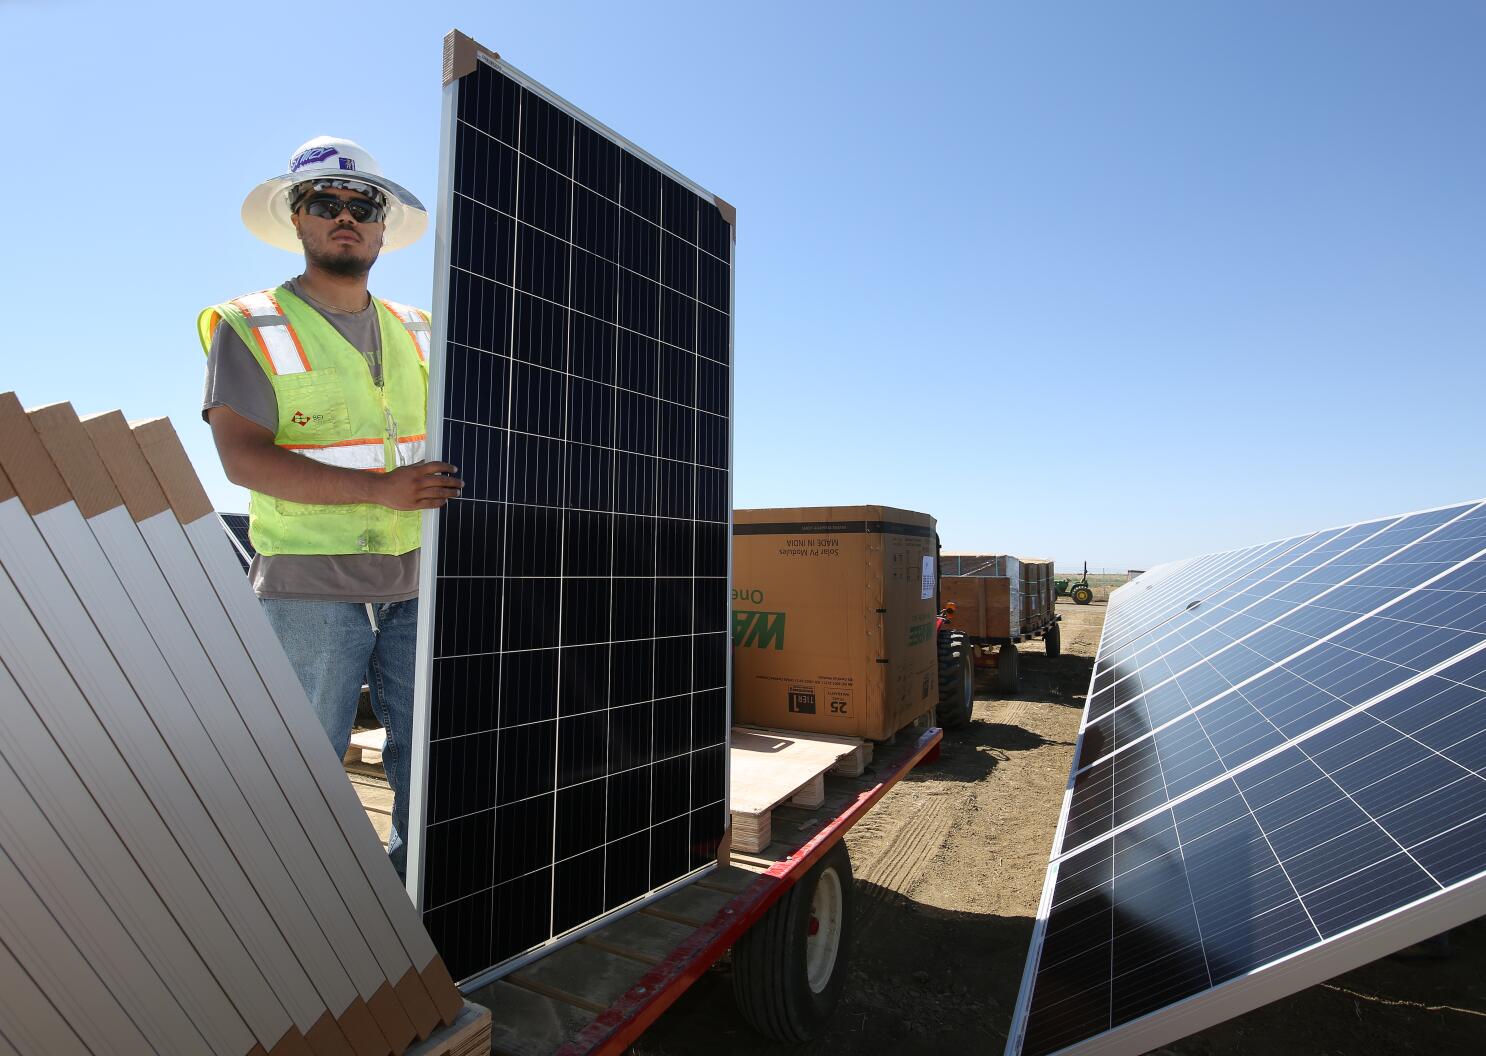 Solar on farmland could help California keep the lights on - Los